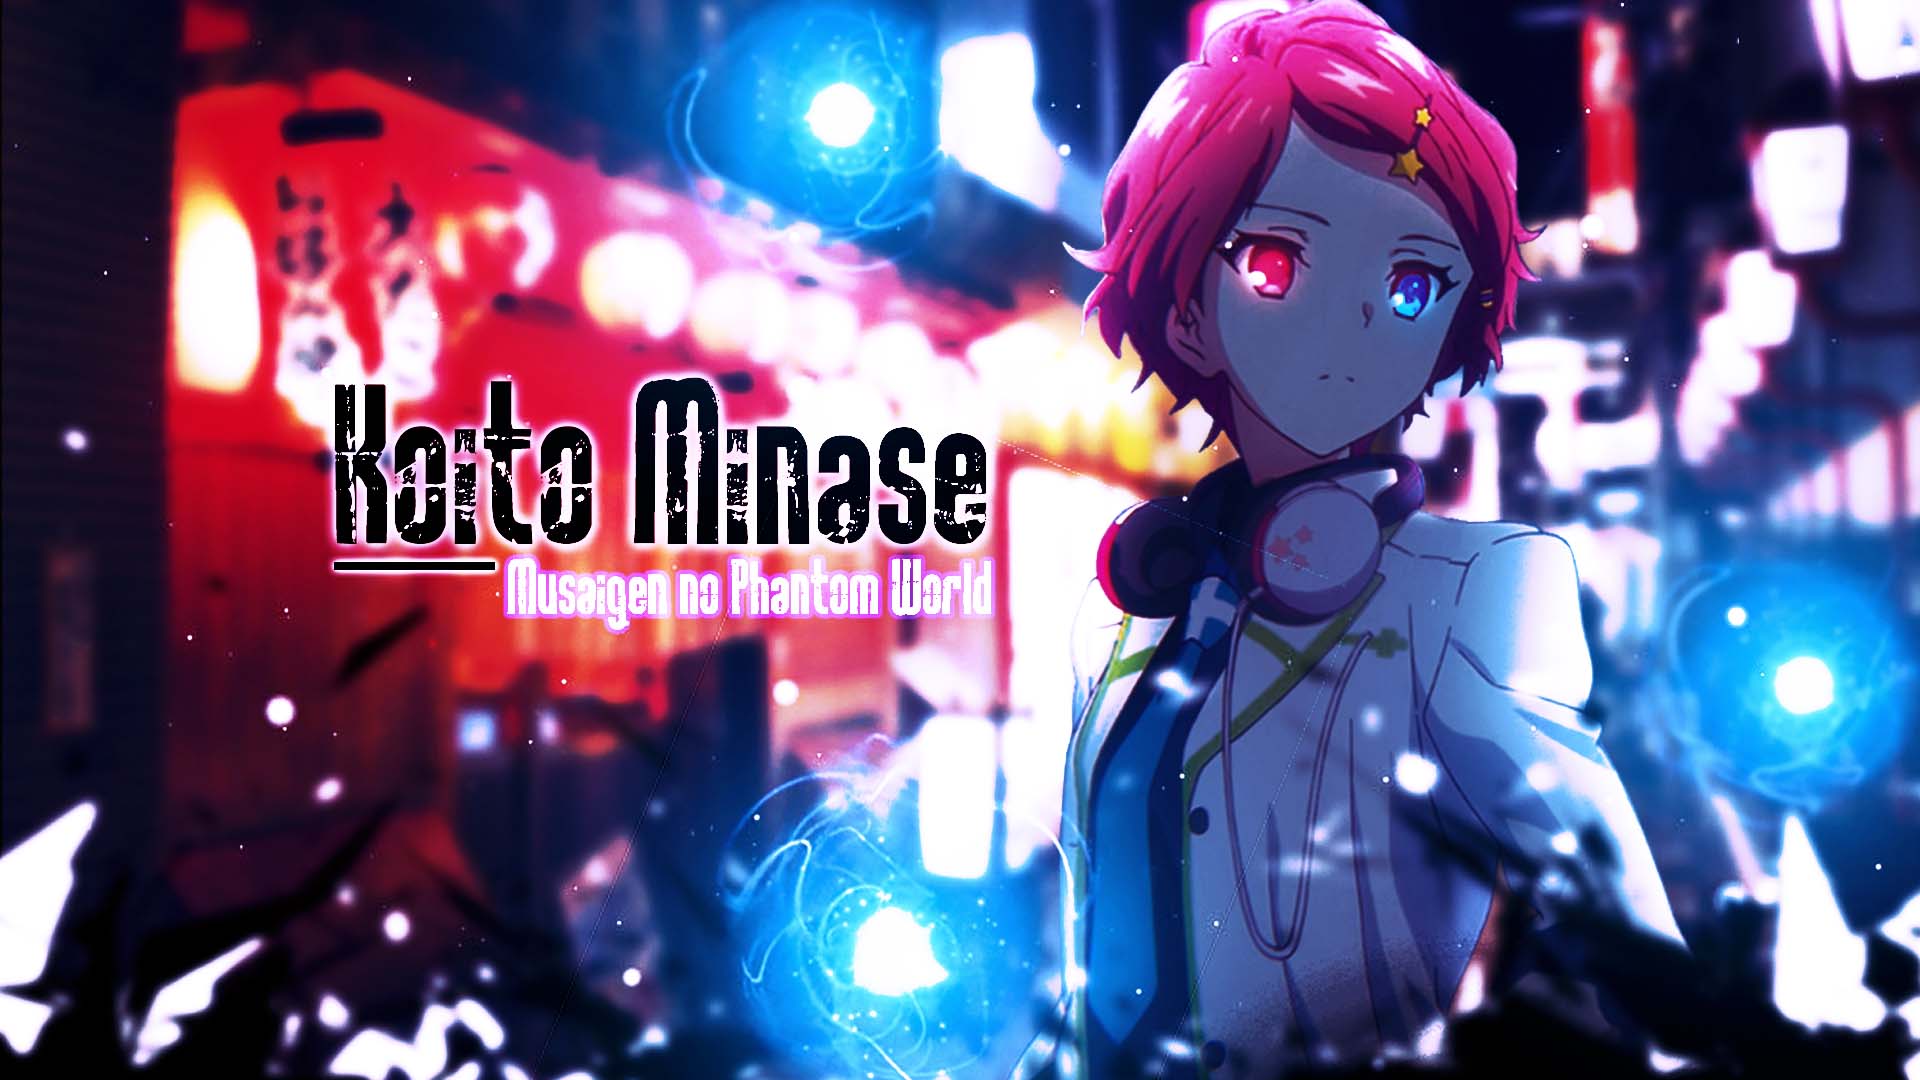 Musaigen no Phantom World:Minase Koito Mega Cute Preview HD Render